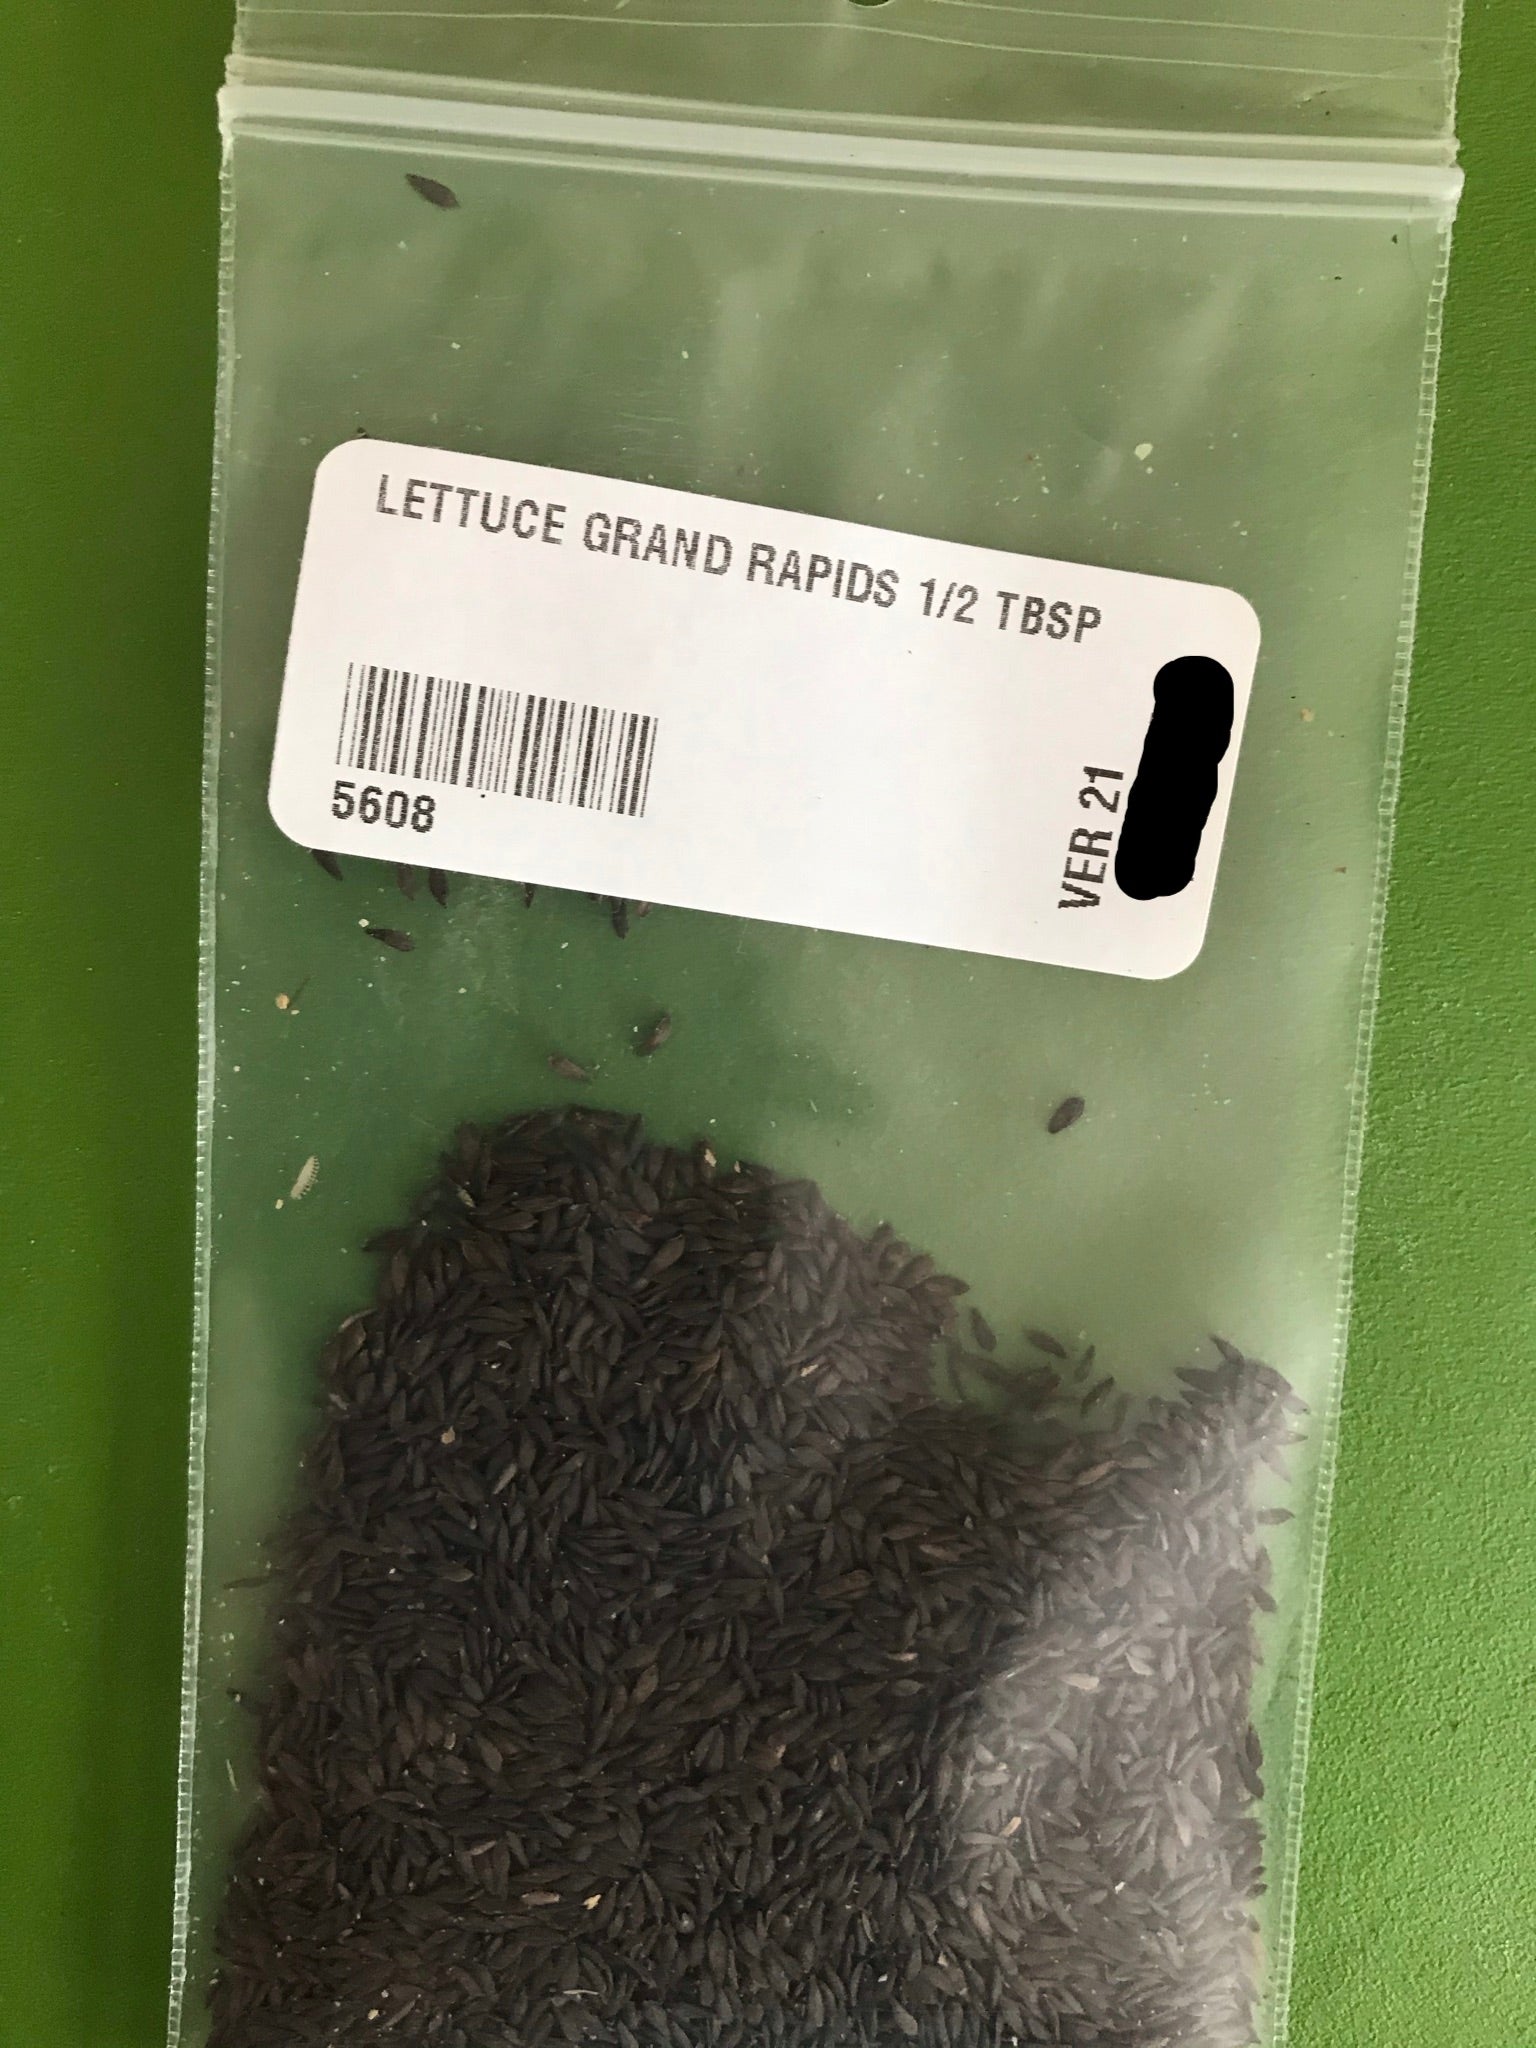 Grand Rapids Leaf Lettuce - 1/2 Tbsp - Bulk